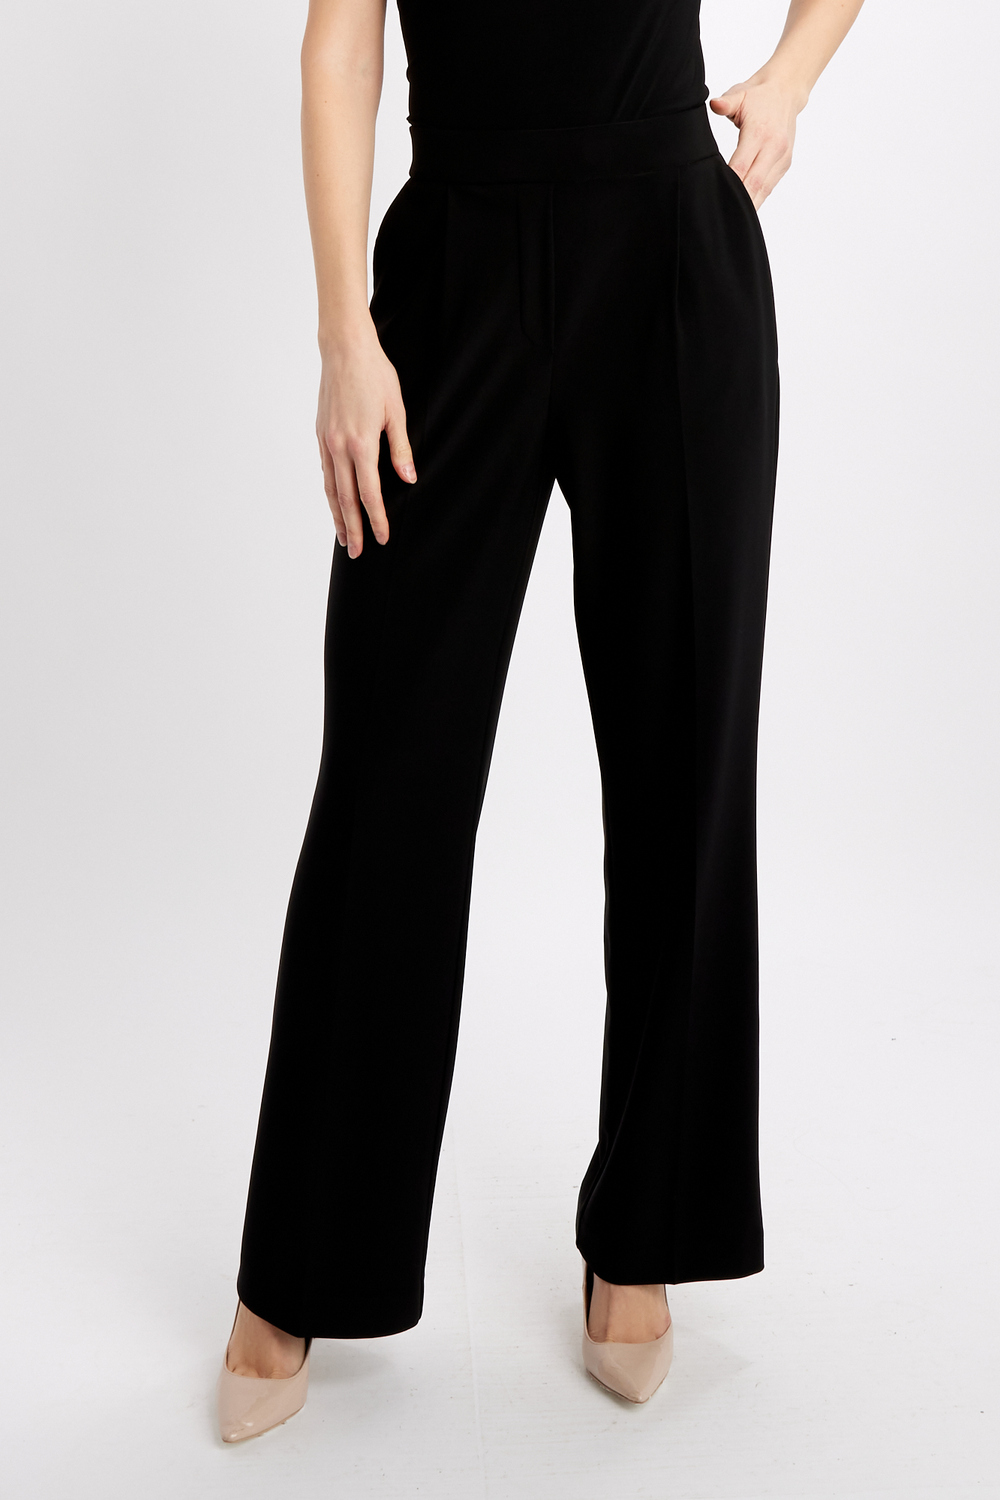 Pleated & Tailored Pants Style 241095. Black